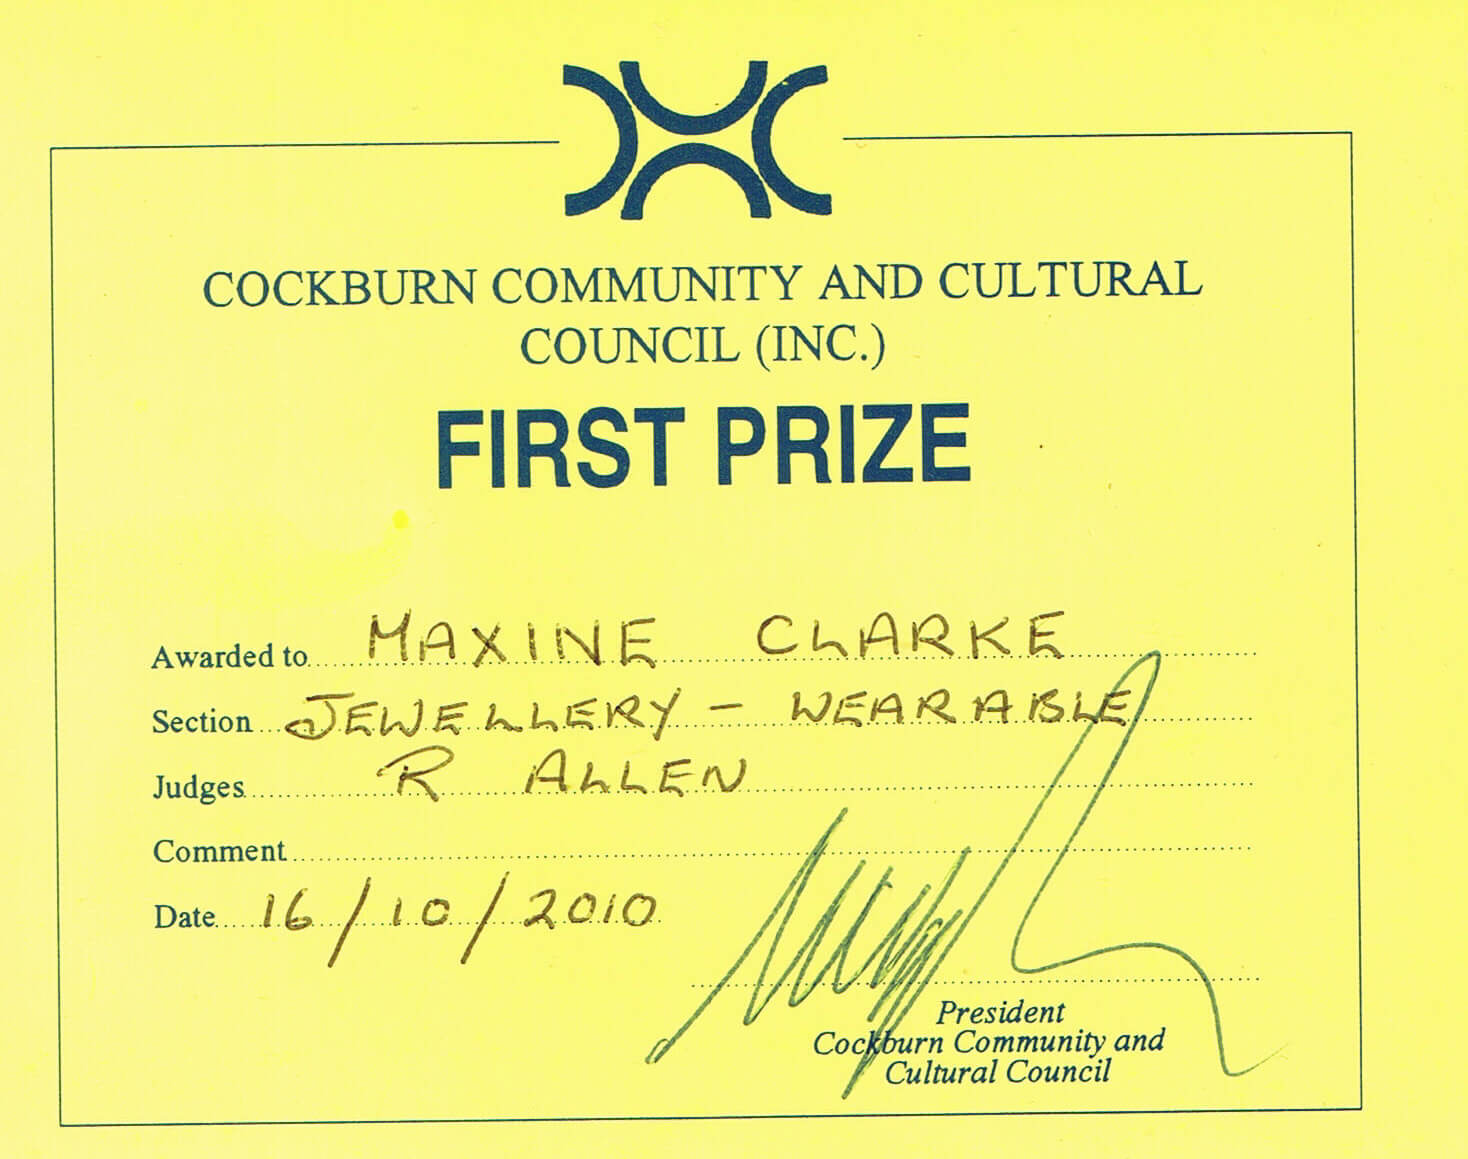 Deandra - First Place Award Winner - Cockburn Community & Cultural Council Inc certificate